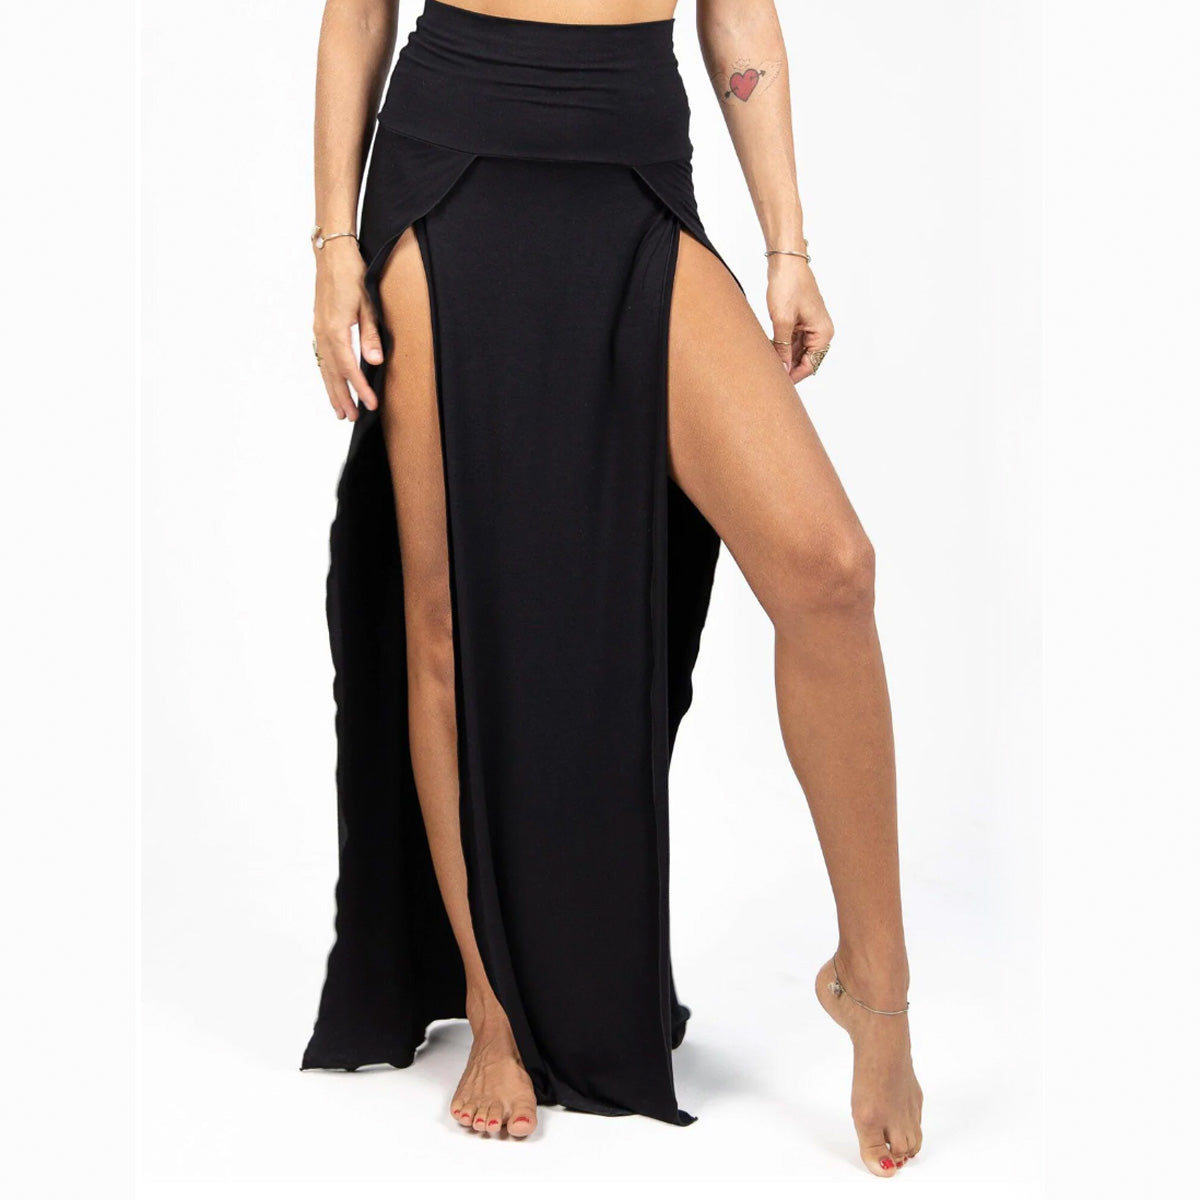 Ladies Double Thigh Split Goddess Festival Maxi Skirt - Black - Free Size